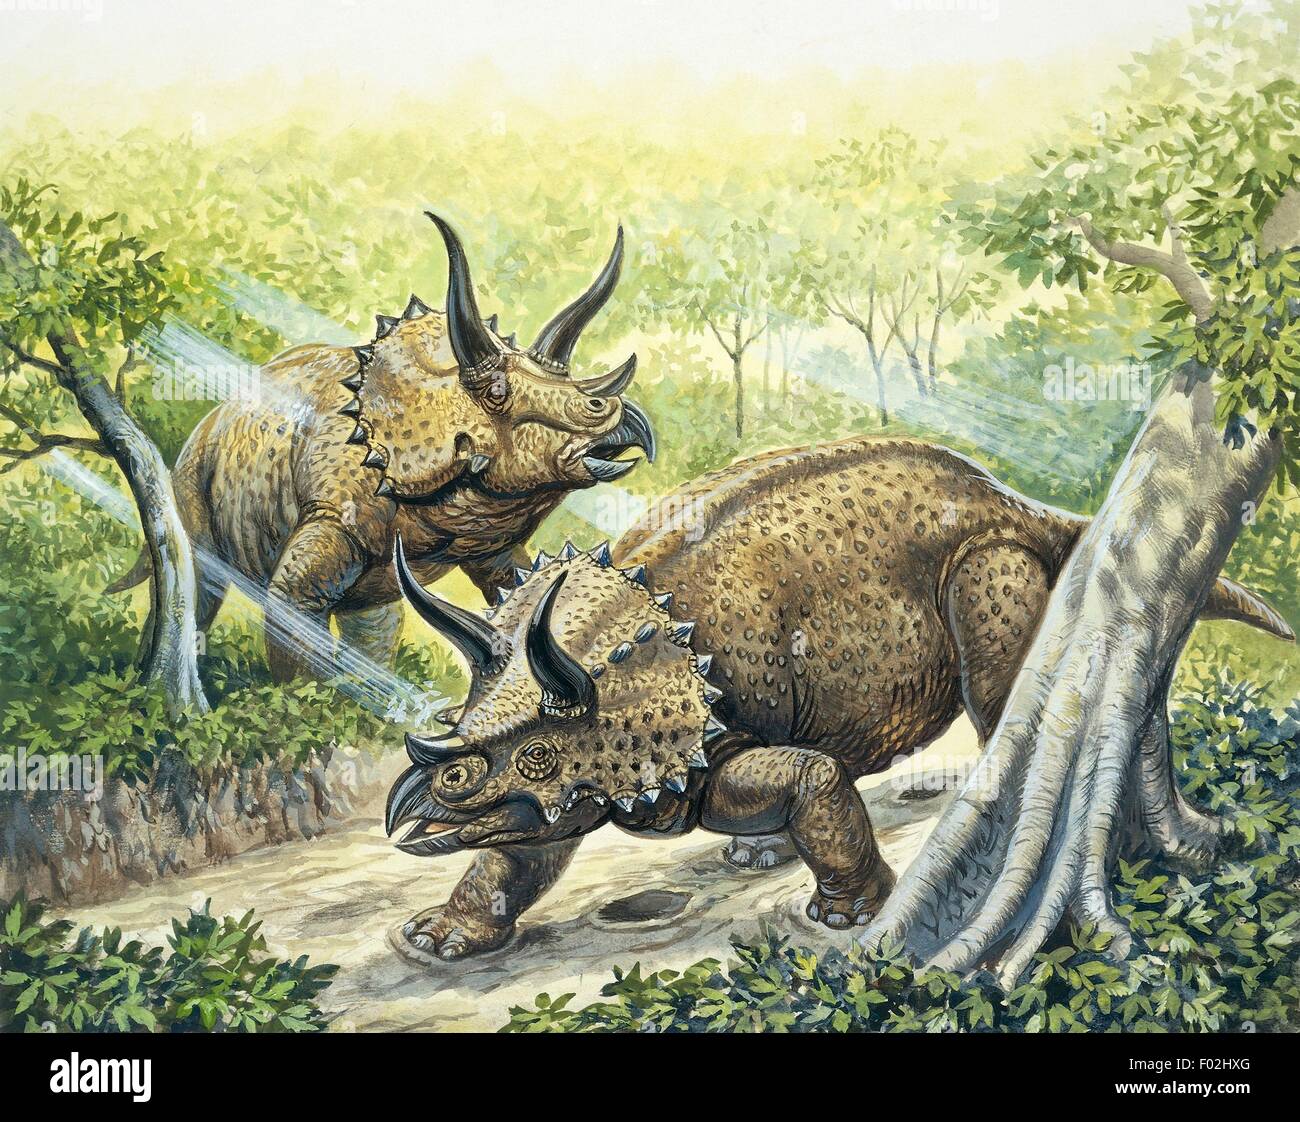 Rekonstruktion von Triceratops (Triceratops Horridus), späten Kreidezeit. Farbigen Illustration. Stockfoto